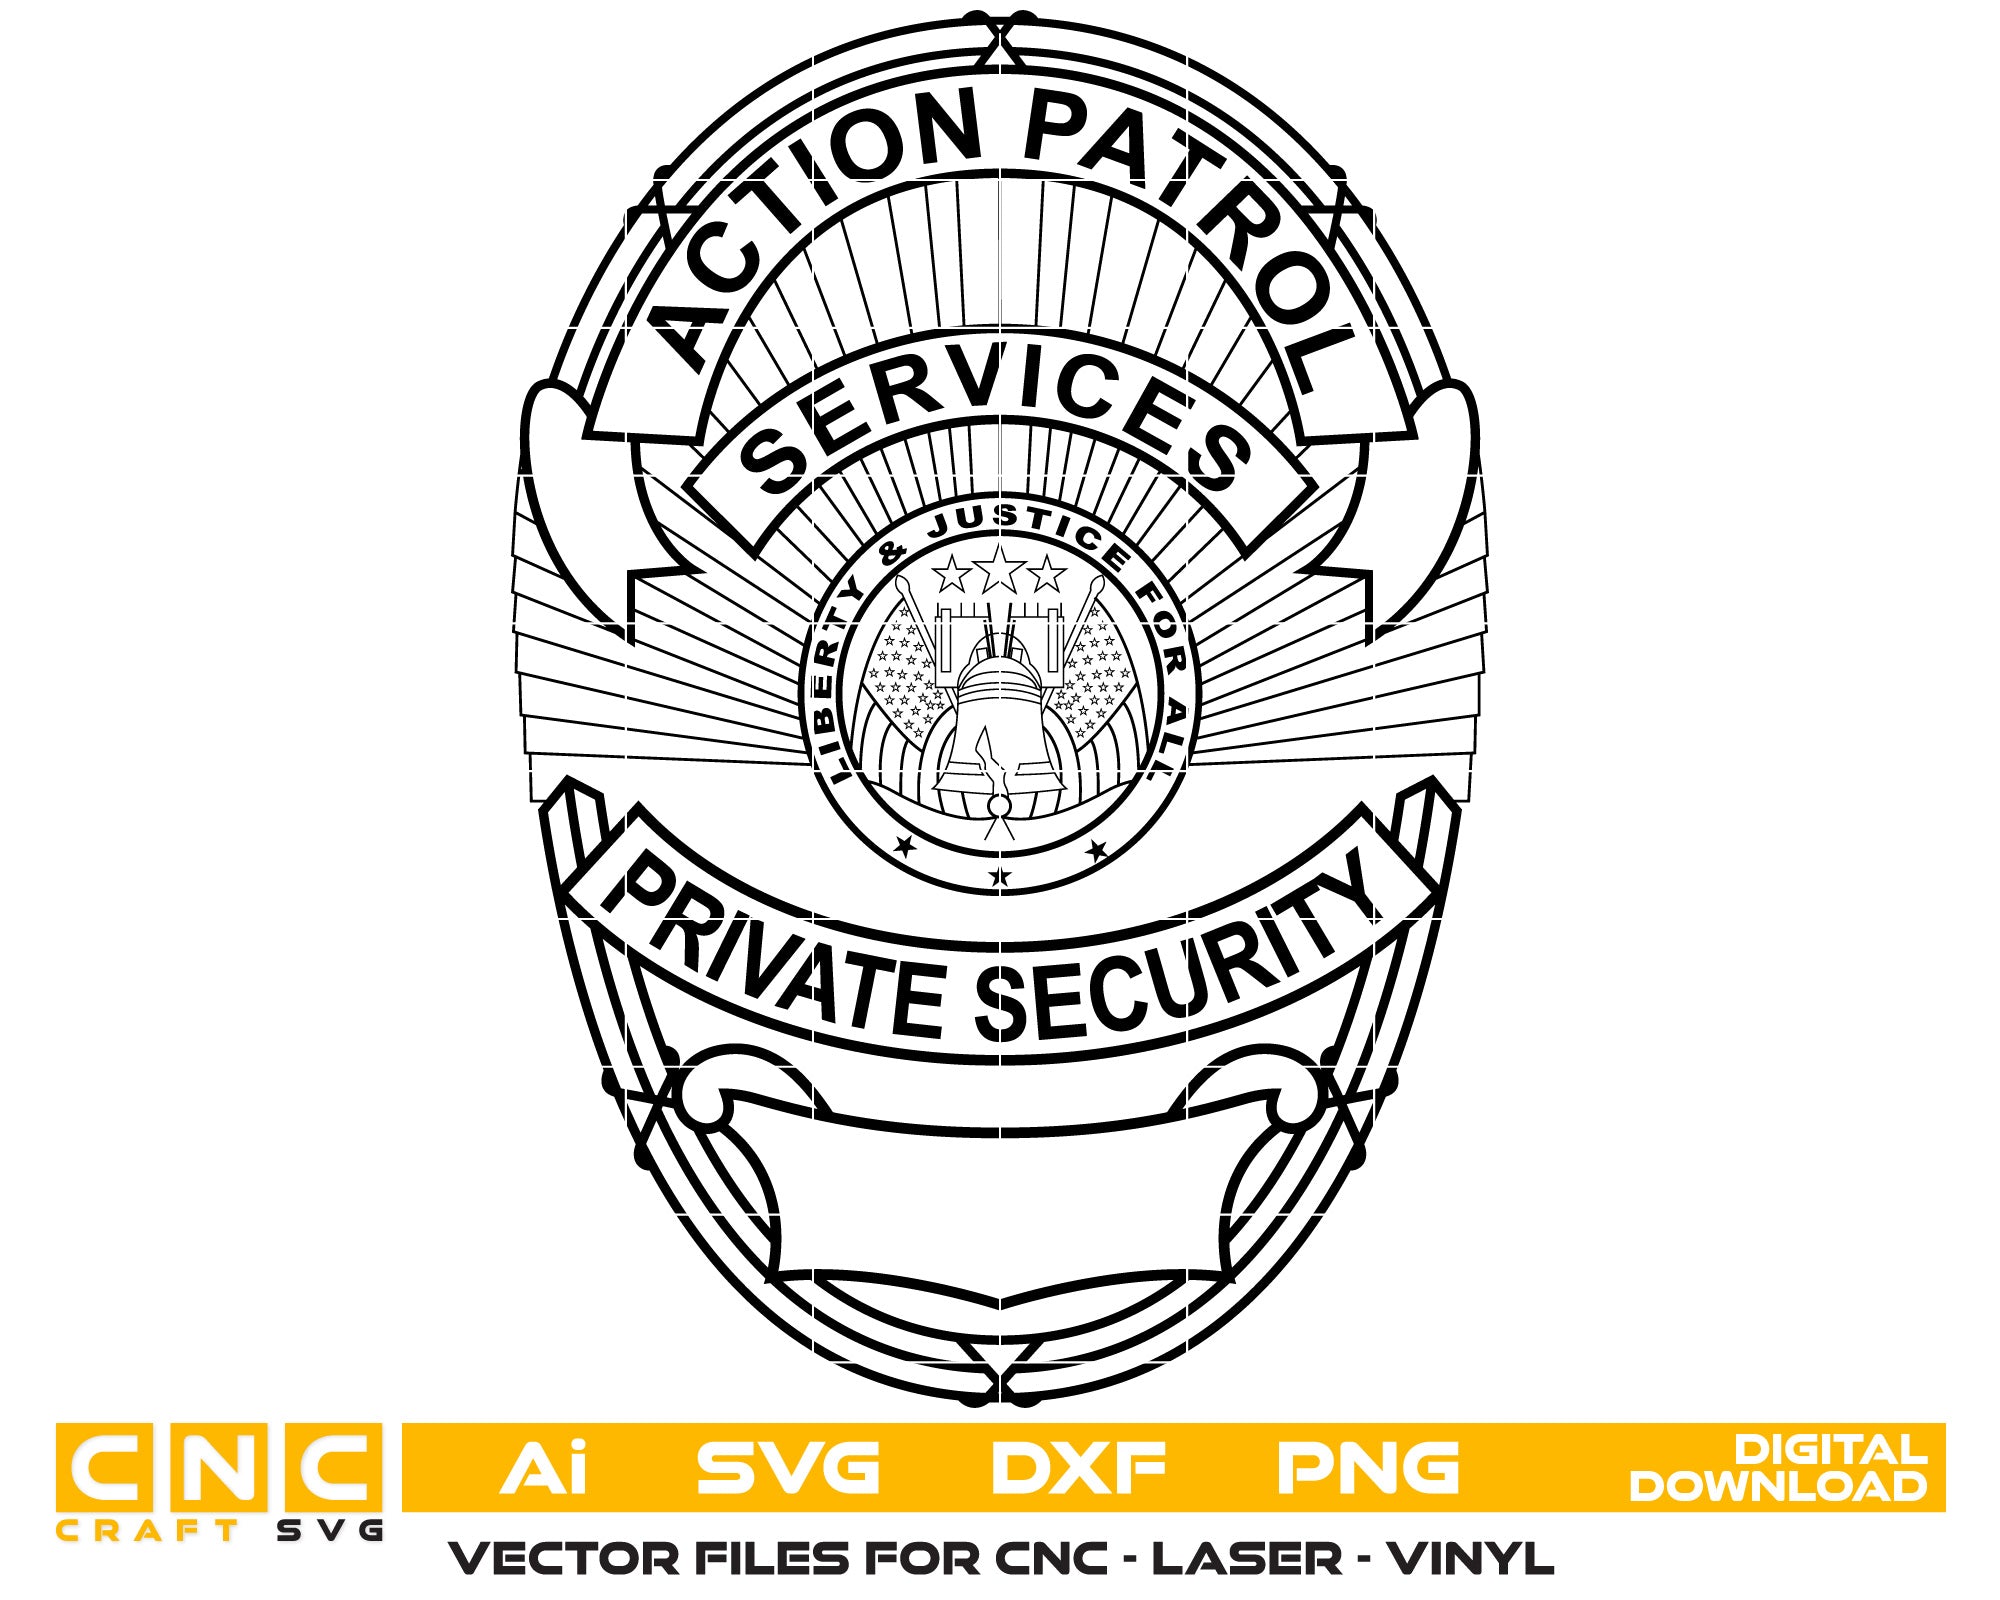 Action Patrol Services Badge Vector Art, Ai,SVG, DXF, PNG, Digital Files